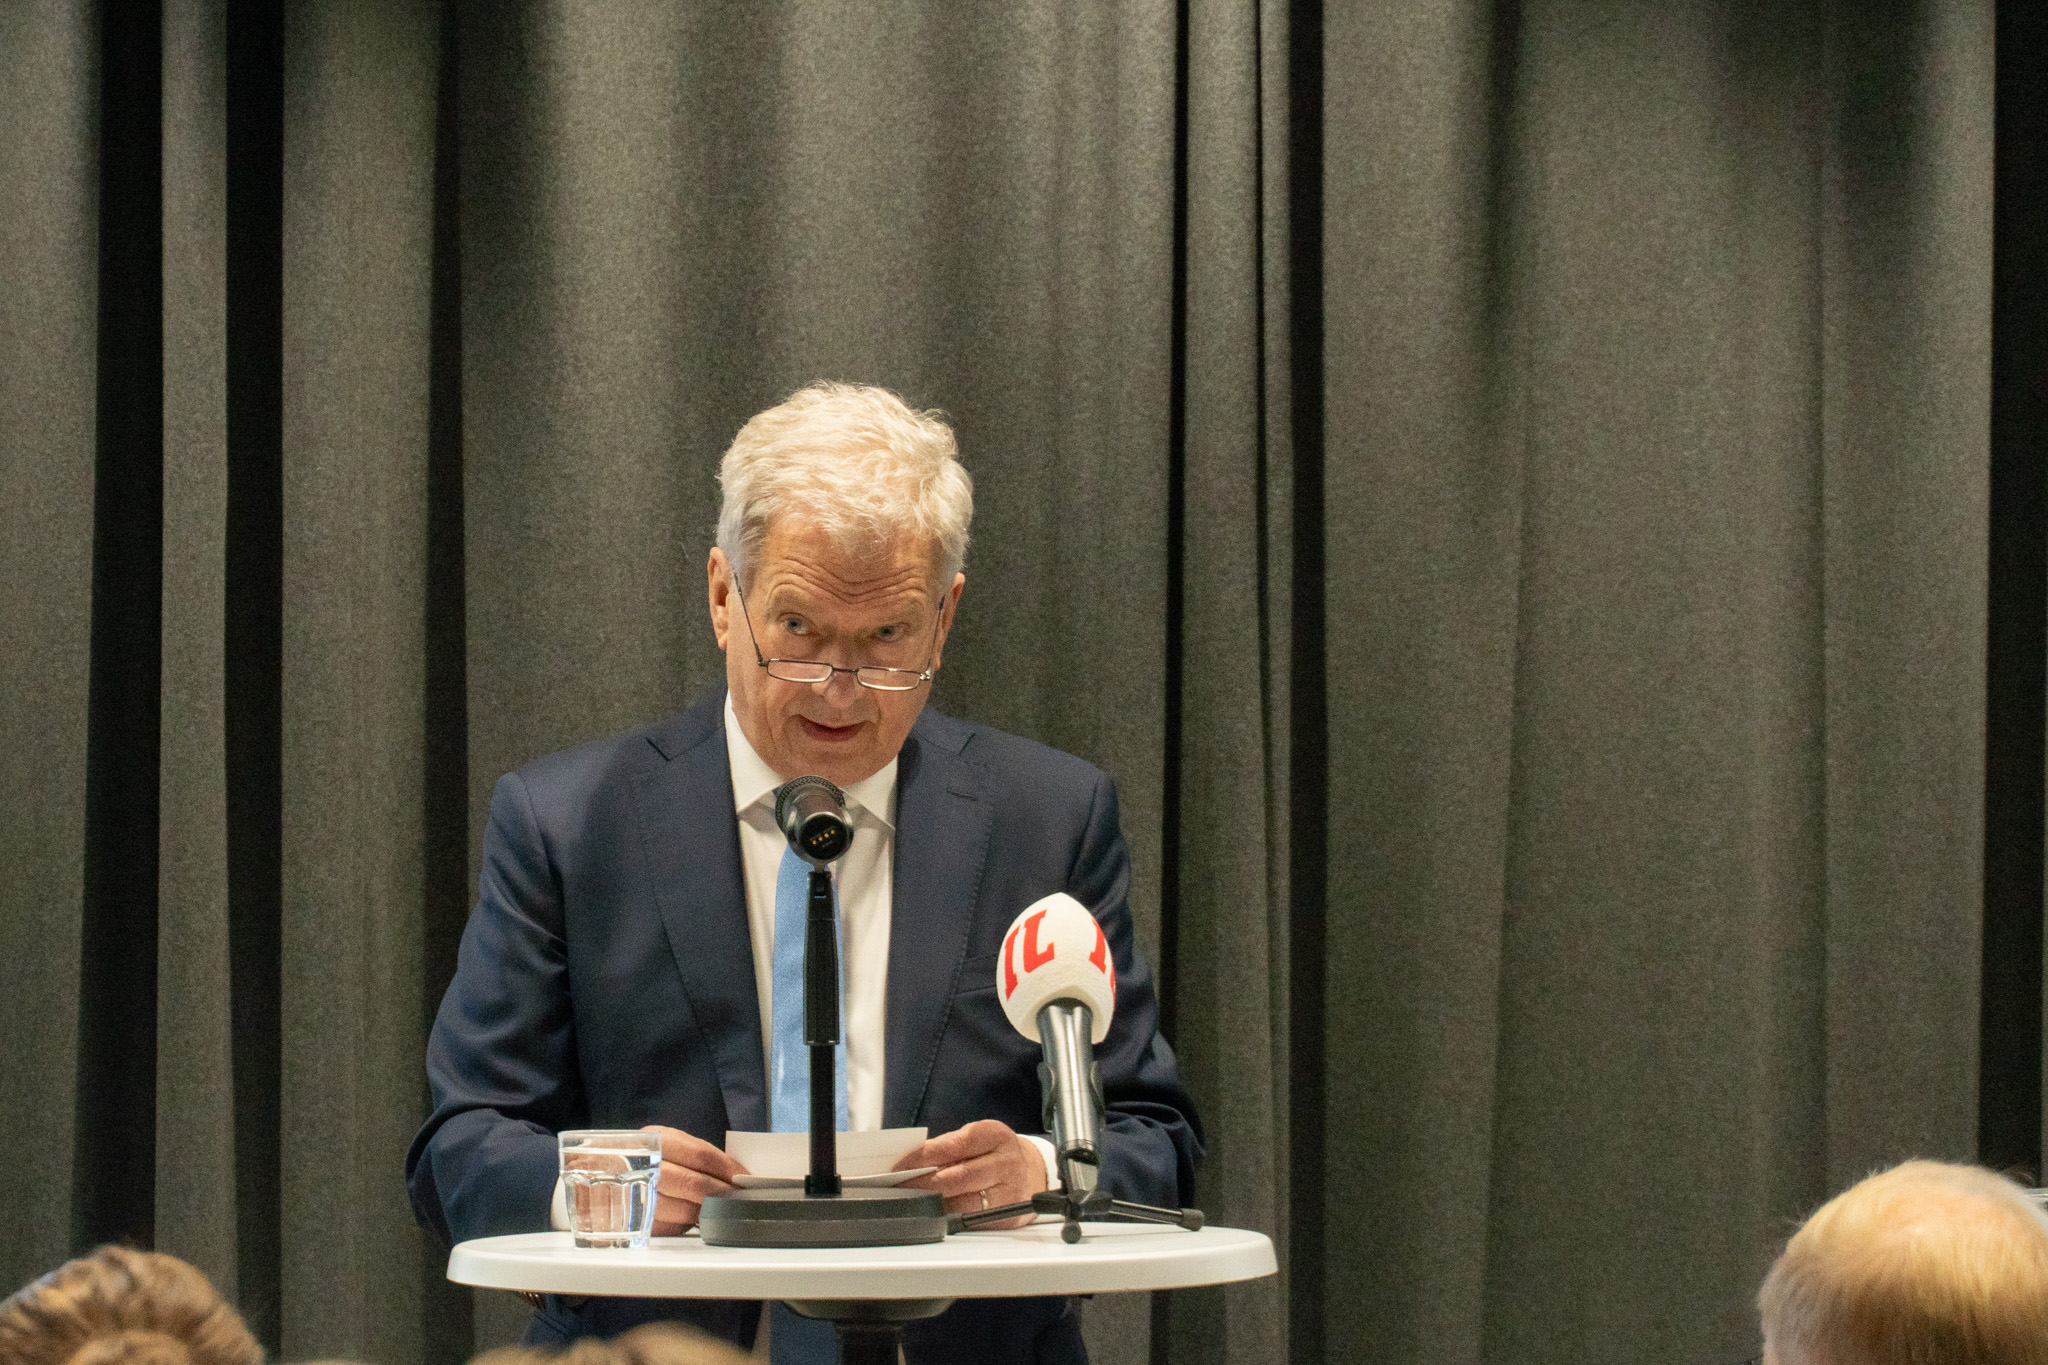 President of the Republic of Finland Sauli Niinistö speaks to an audience.